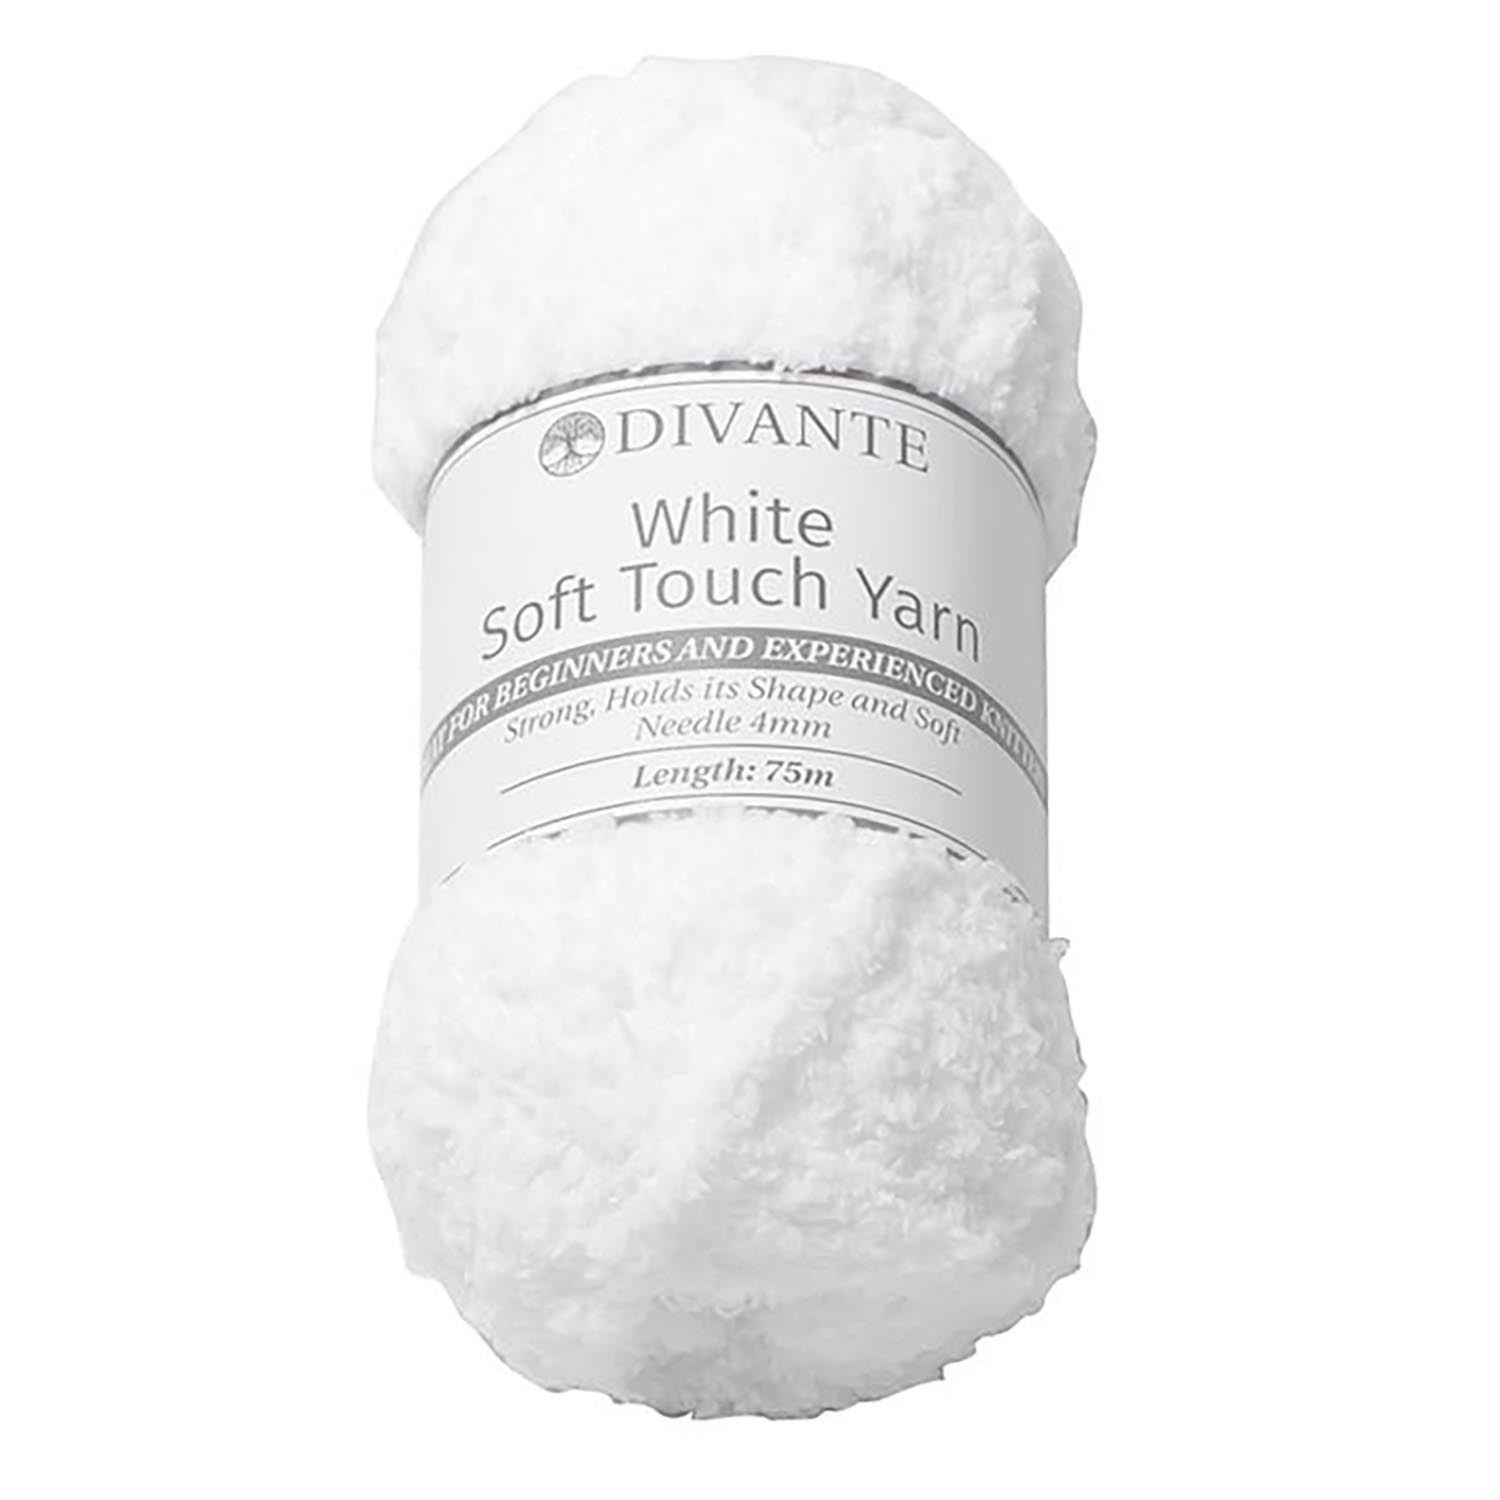 Divante White Soft Touch Yarn 50g Image